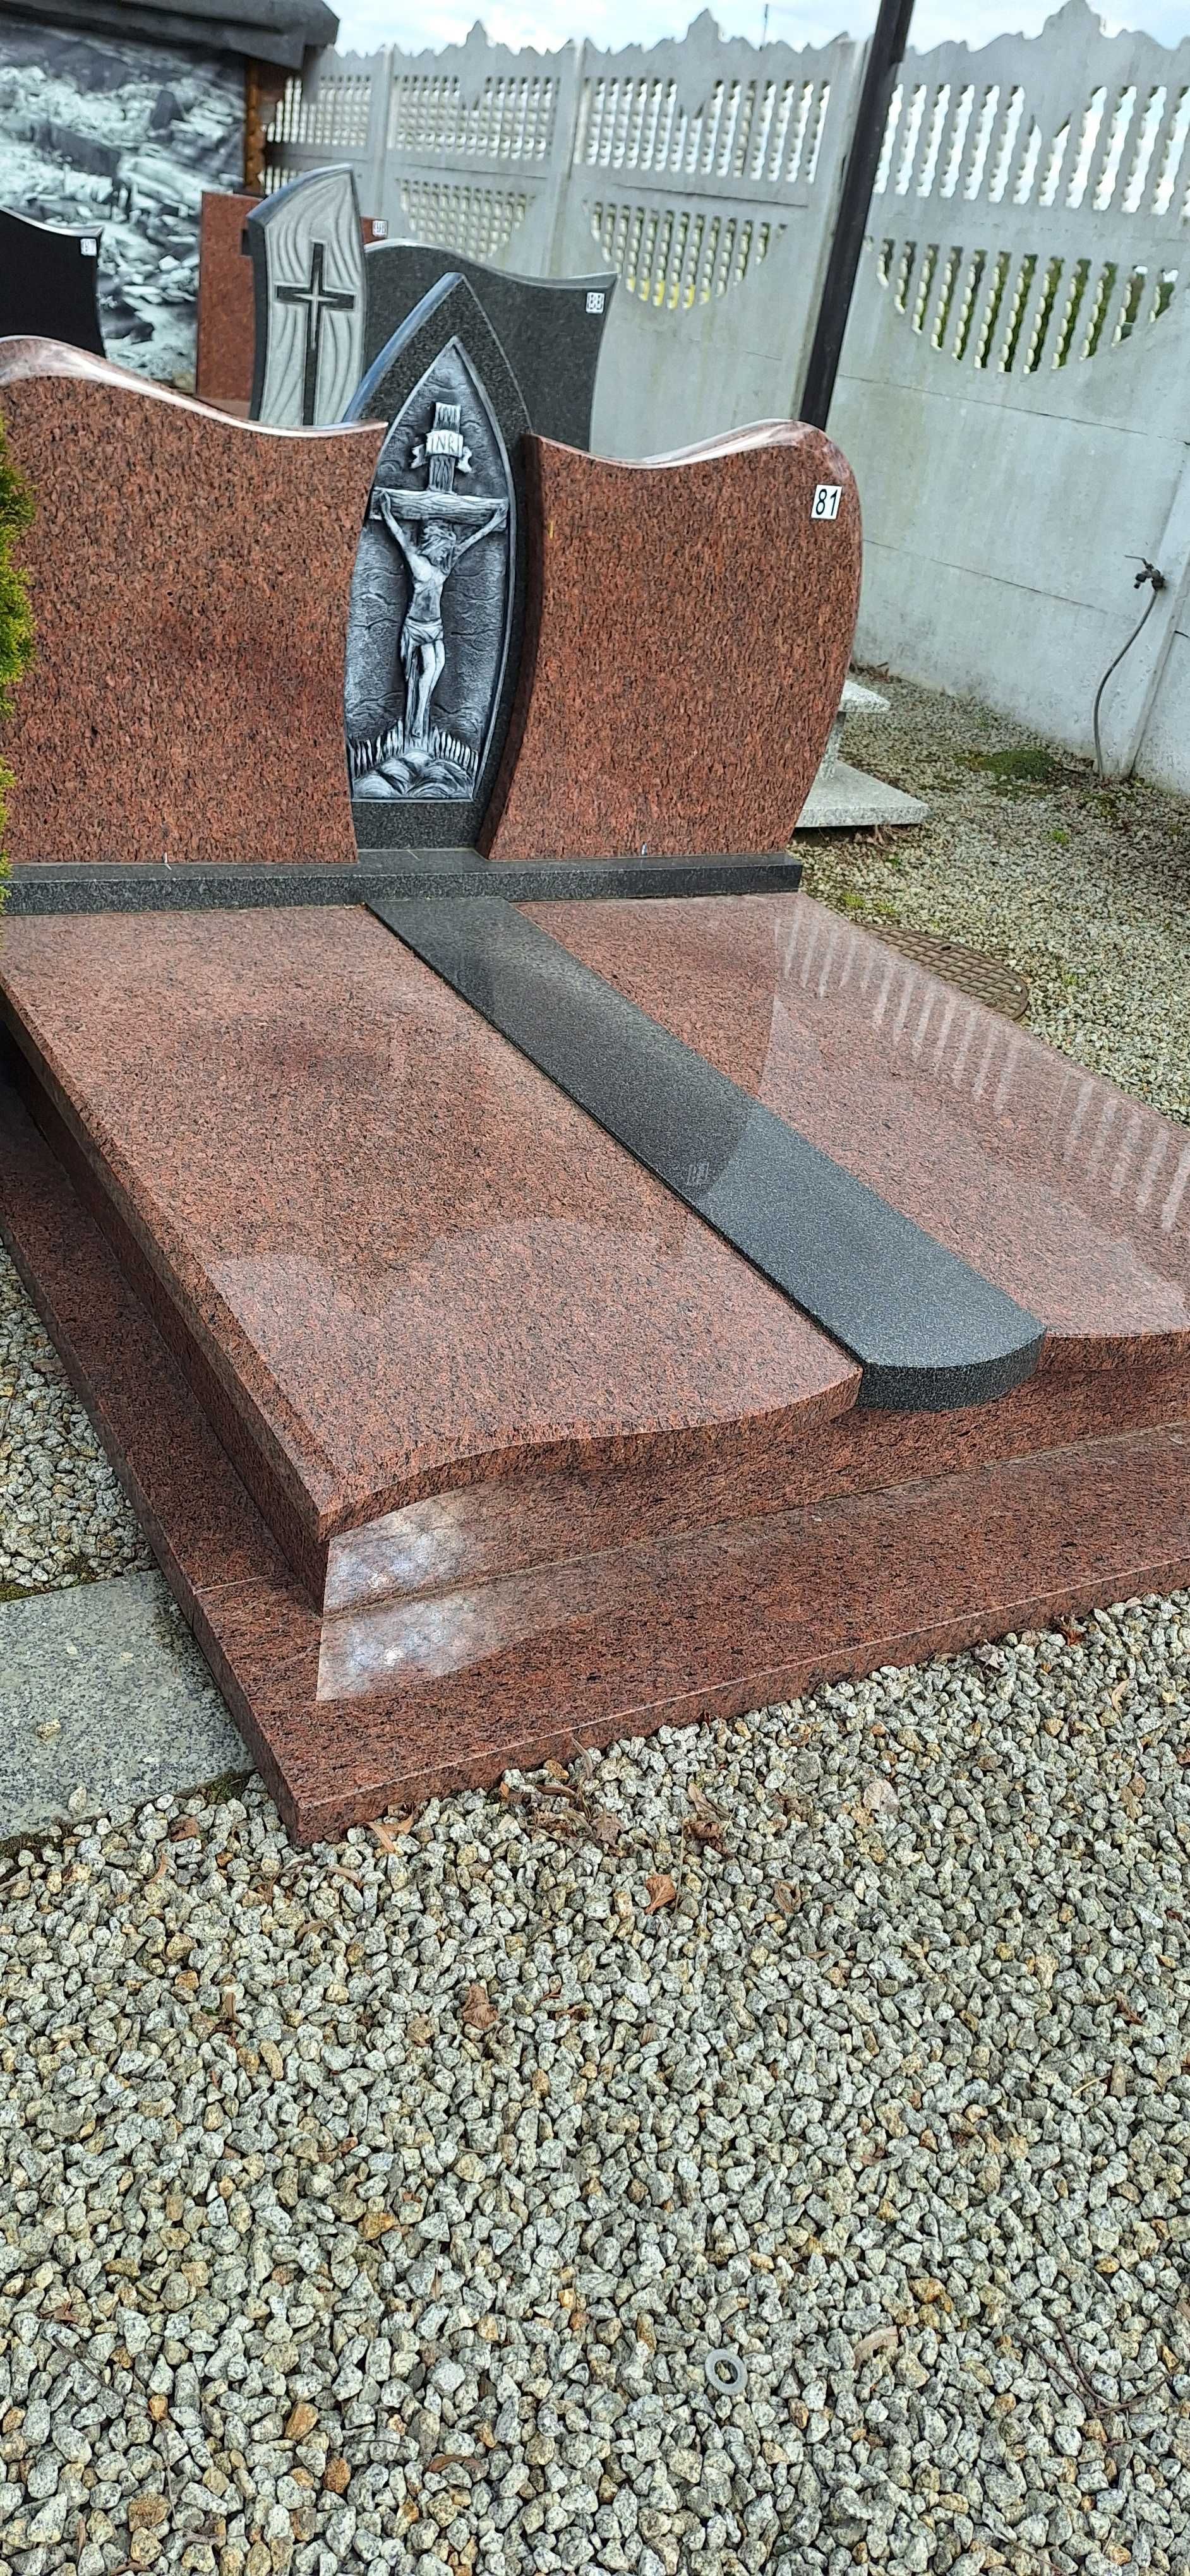 nagrobek pomnik nagrobki pomniki nagrobek granitowy pomnik granitowy